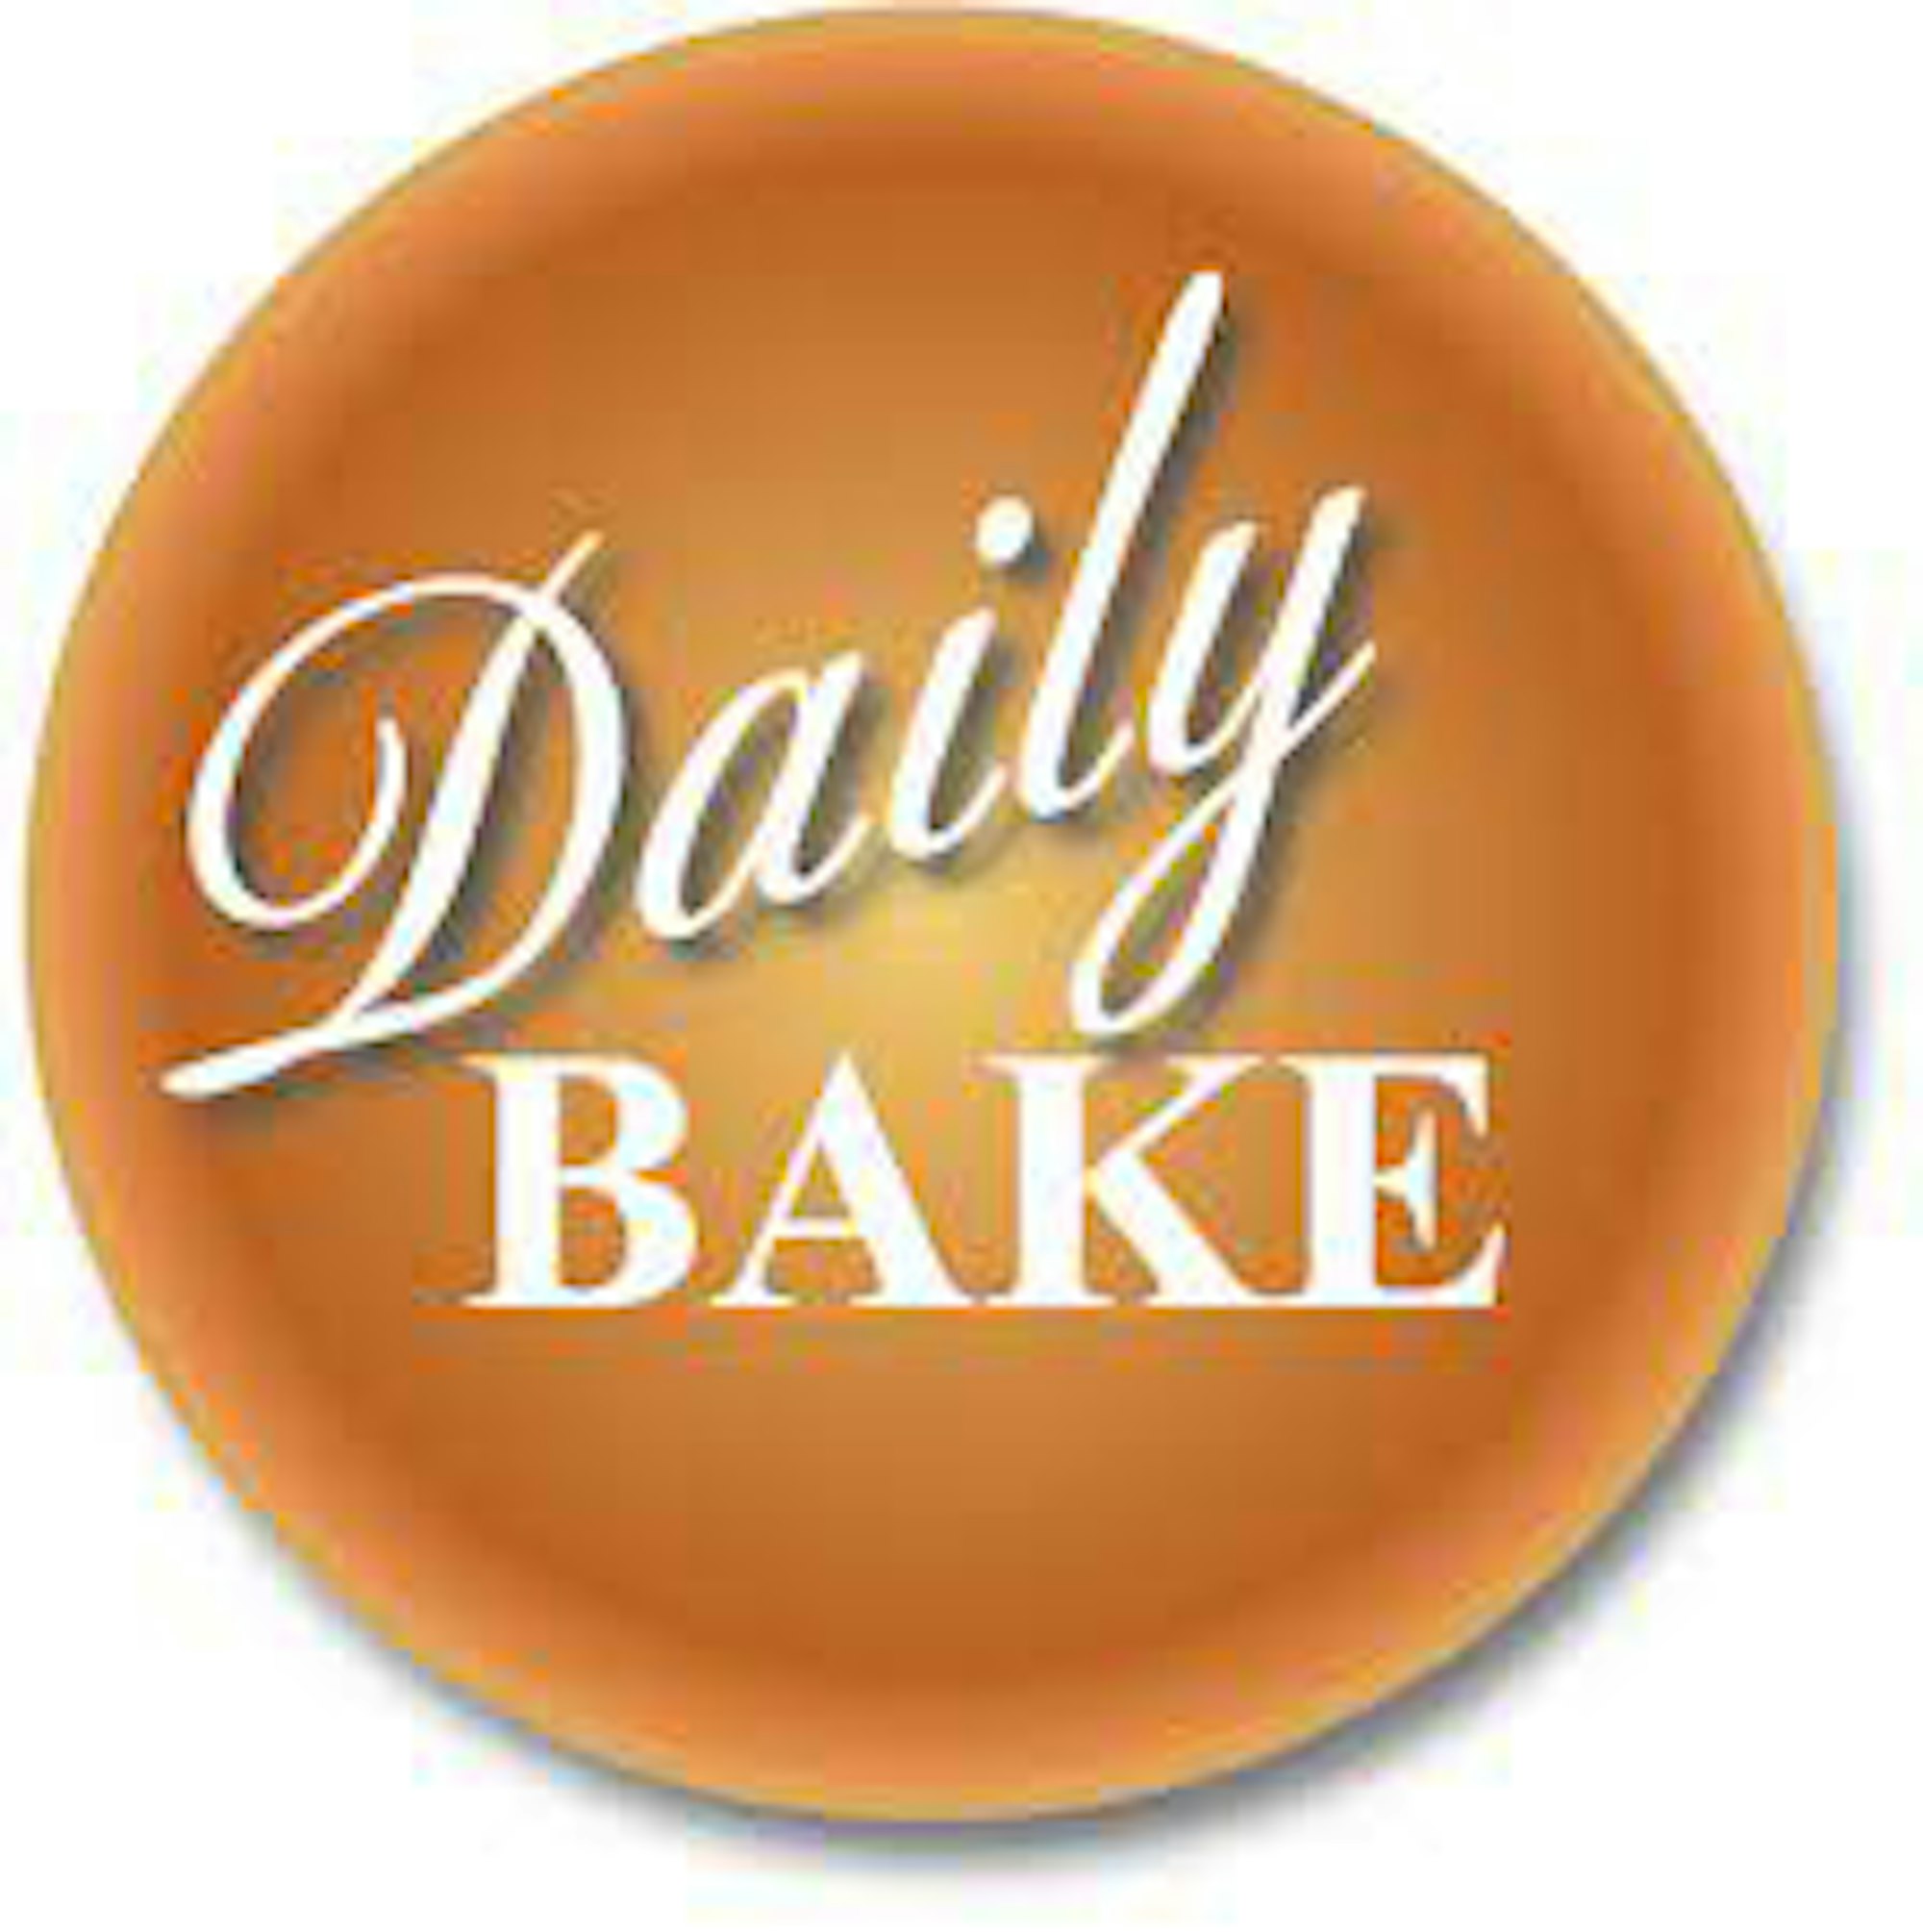 Daily Bake